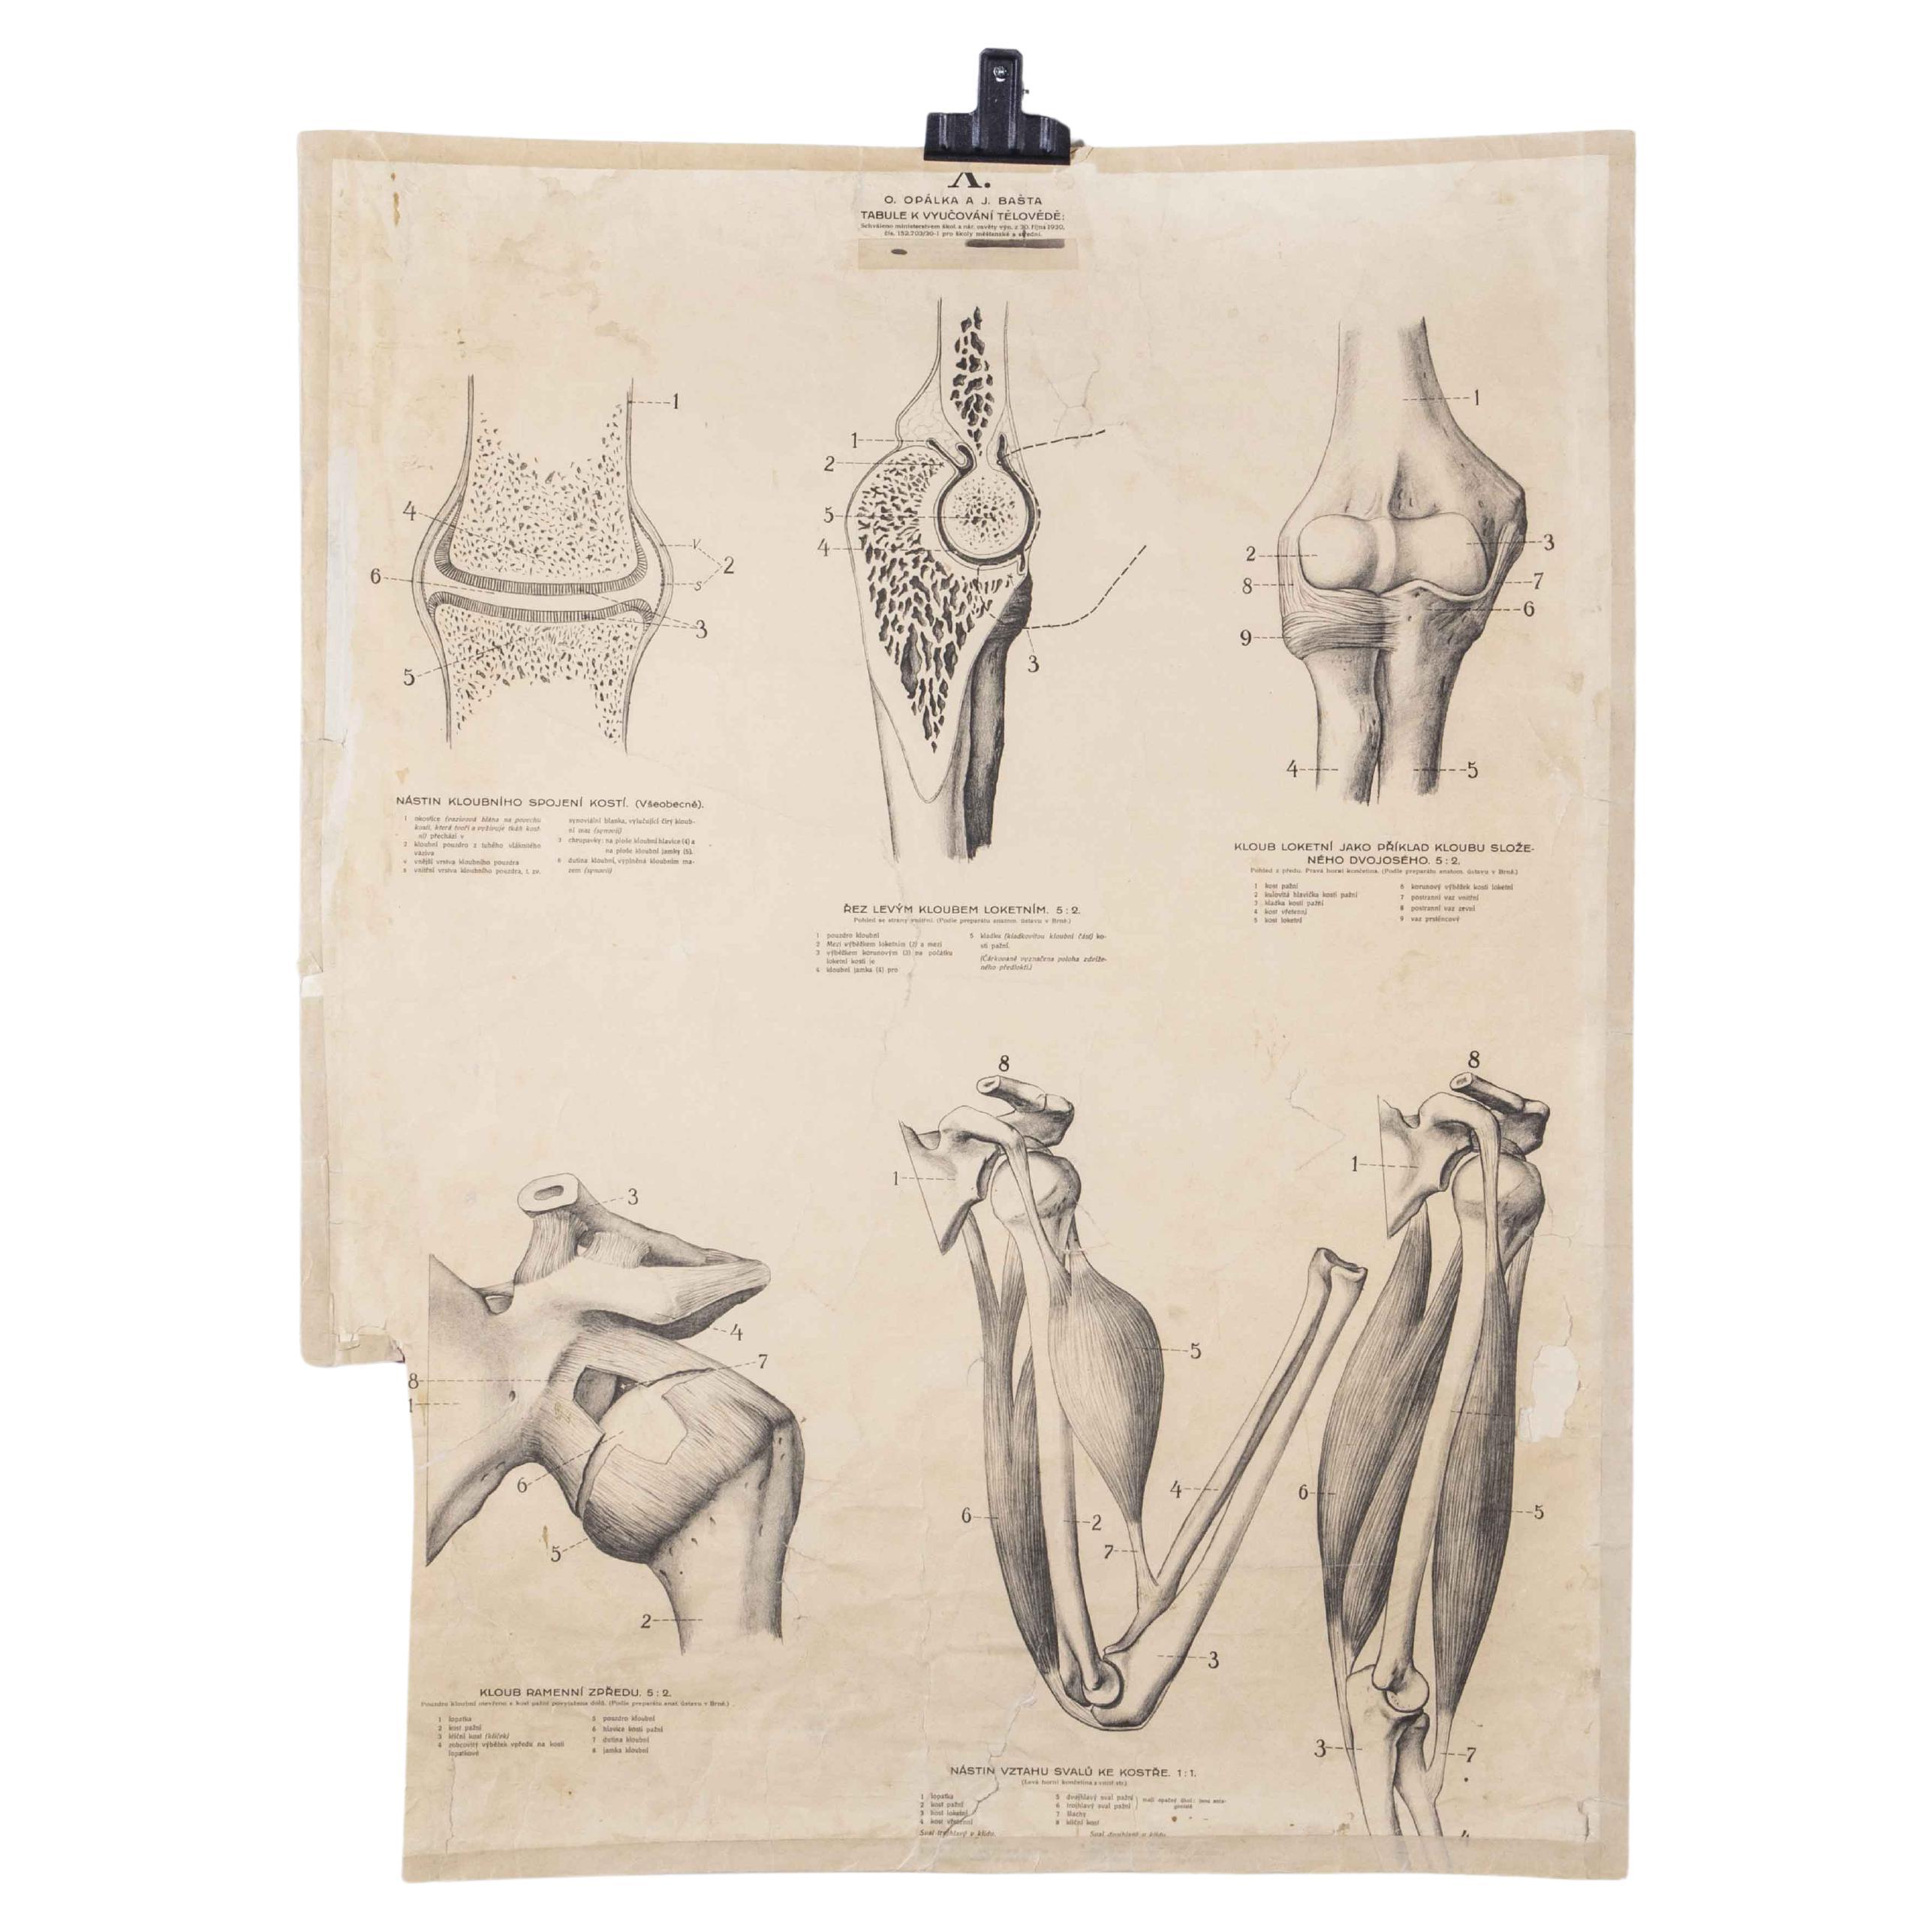 1930's Educational Poster - Human Anatomy